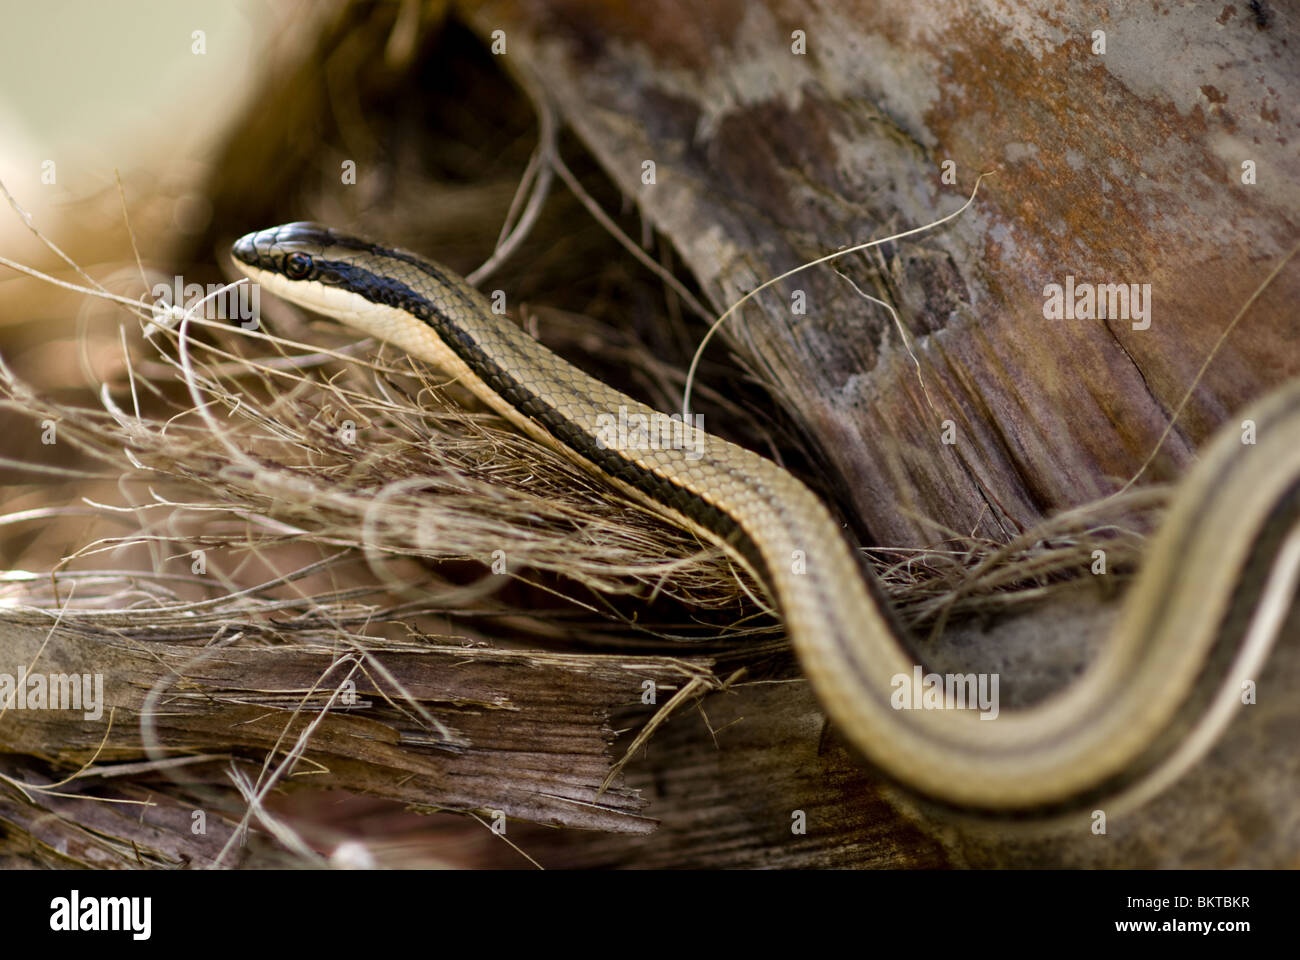 Whip snake en sable/arbre, Erindi réserver, Namibie Banque D'Images